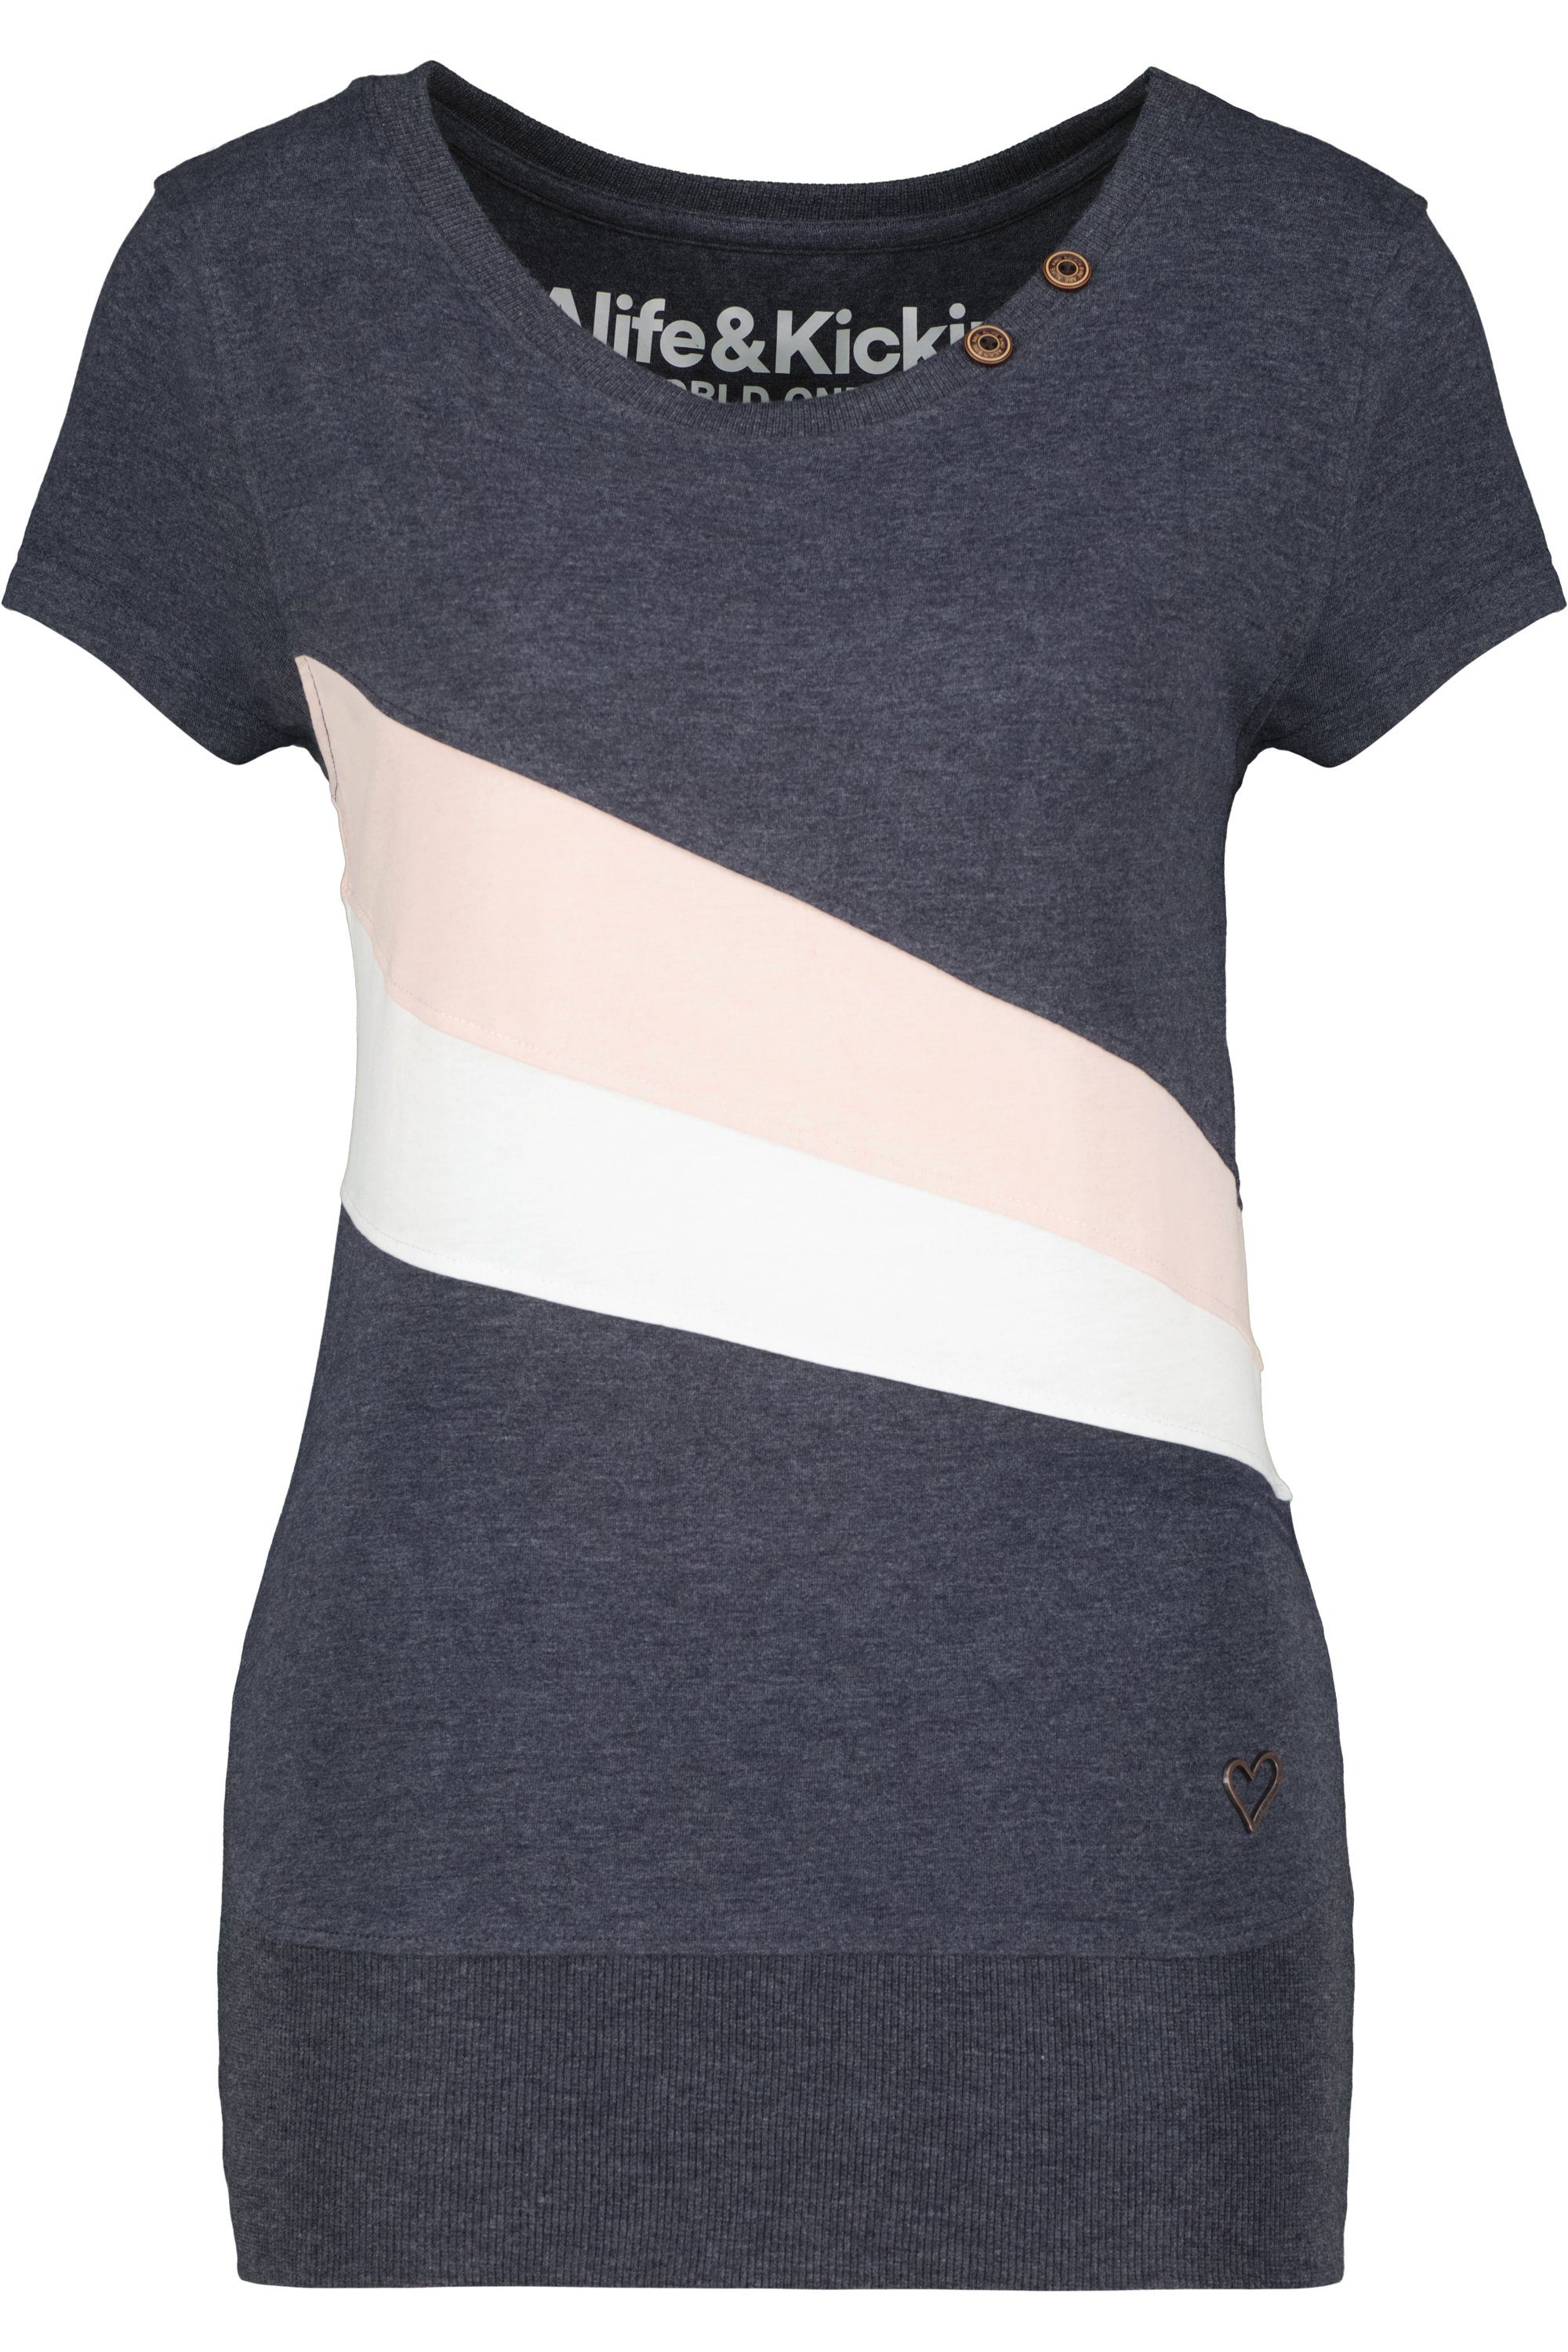 Alife Damen & CleaAK T-Shirt T-Shirt marine Shirt melange A Kickin